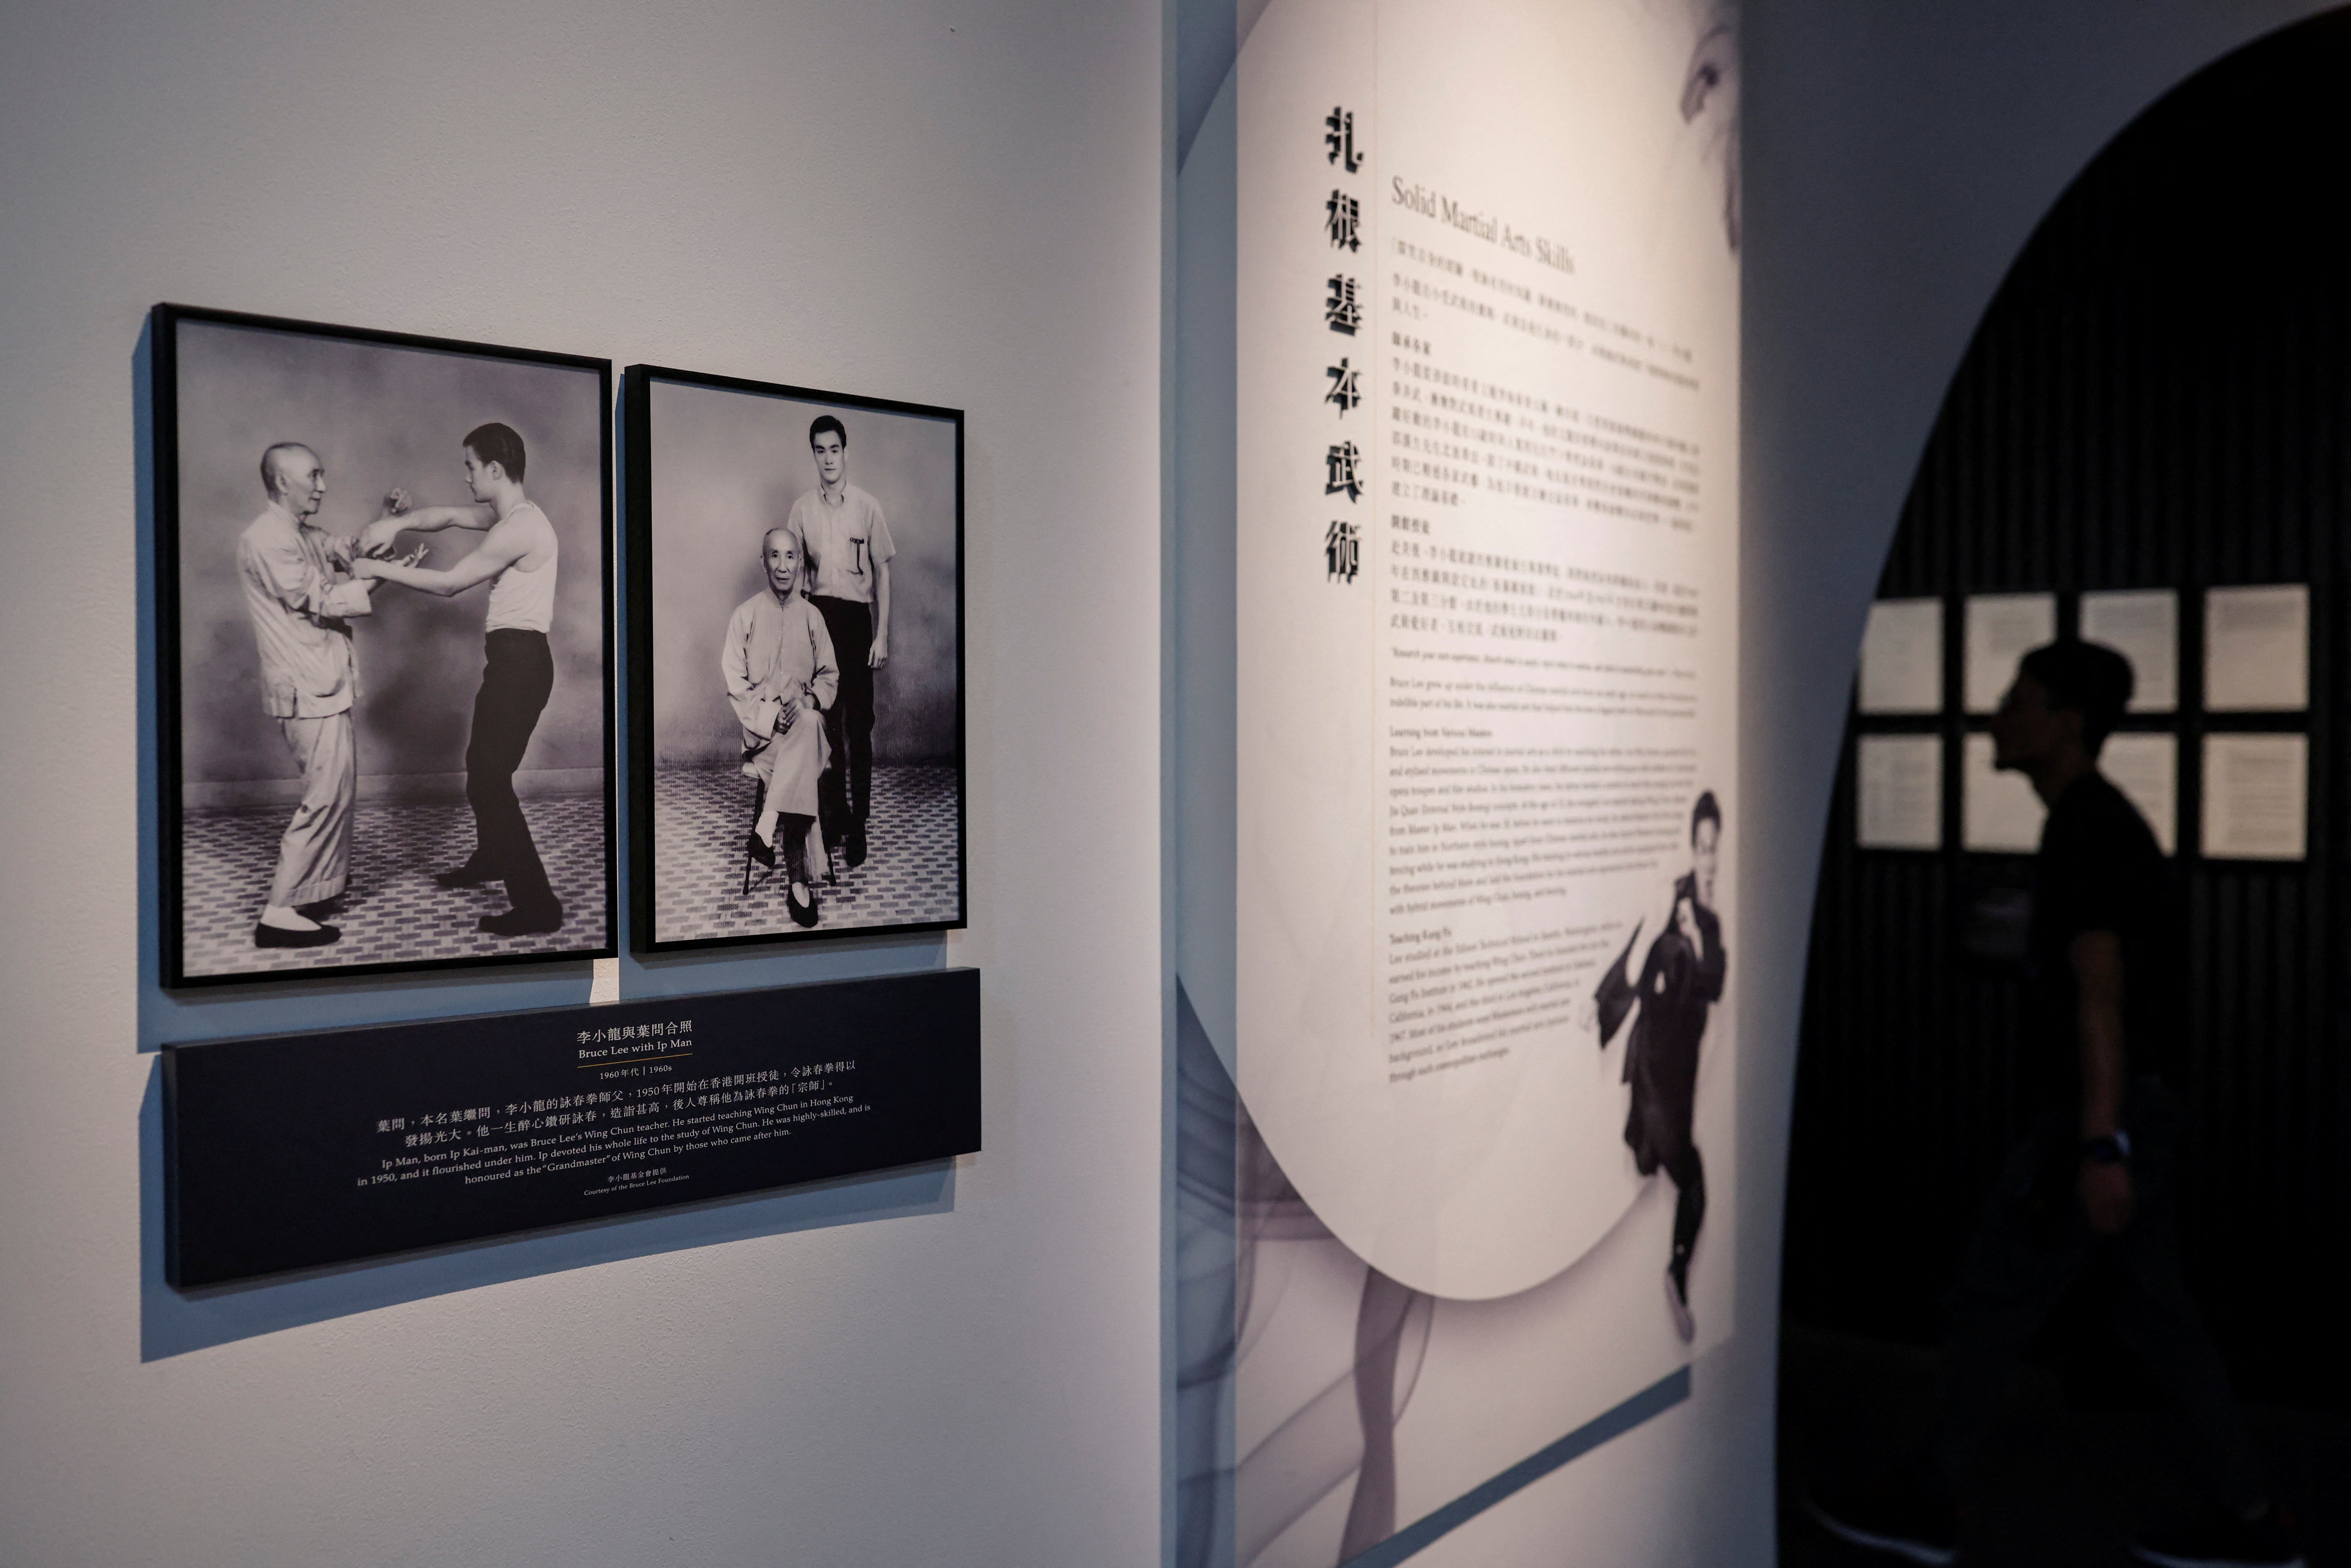 A man walks near photos of Wing Chun grandmaster Ip Man and his student Bruce Lee, at the Hong Kong Heritage Museum